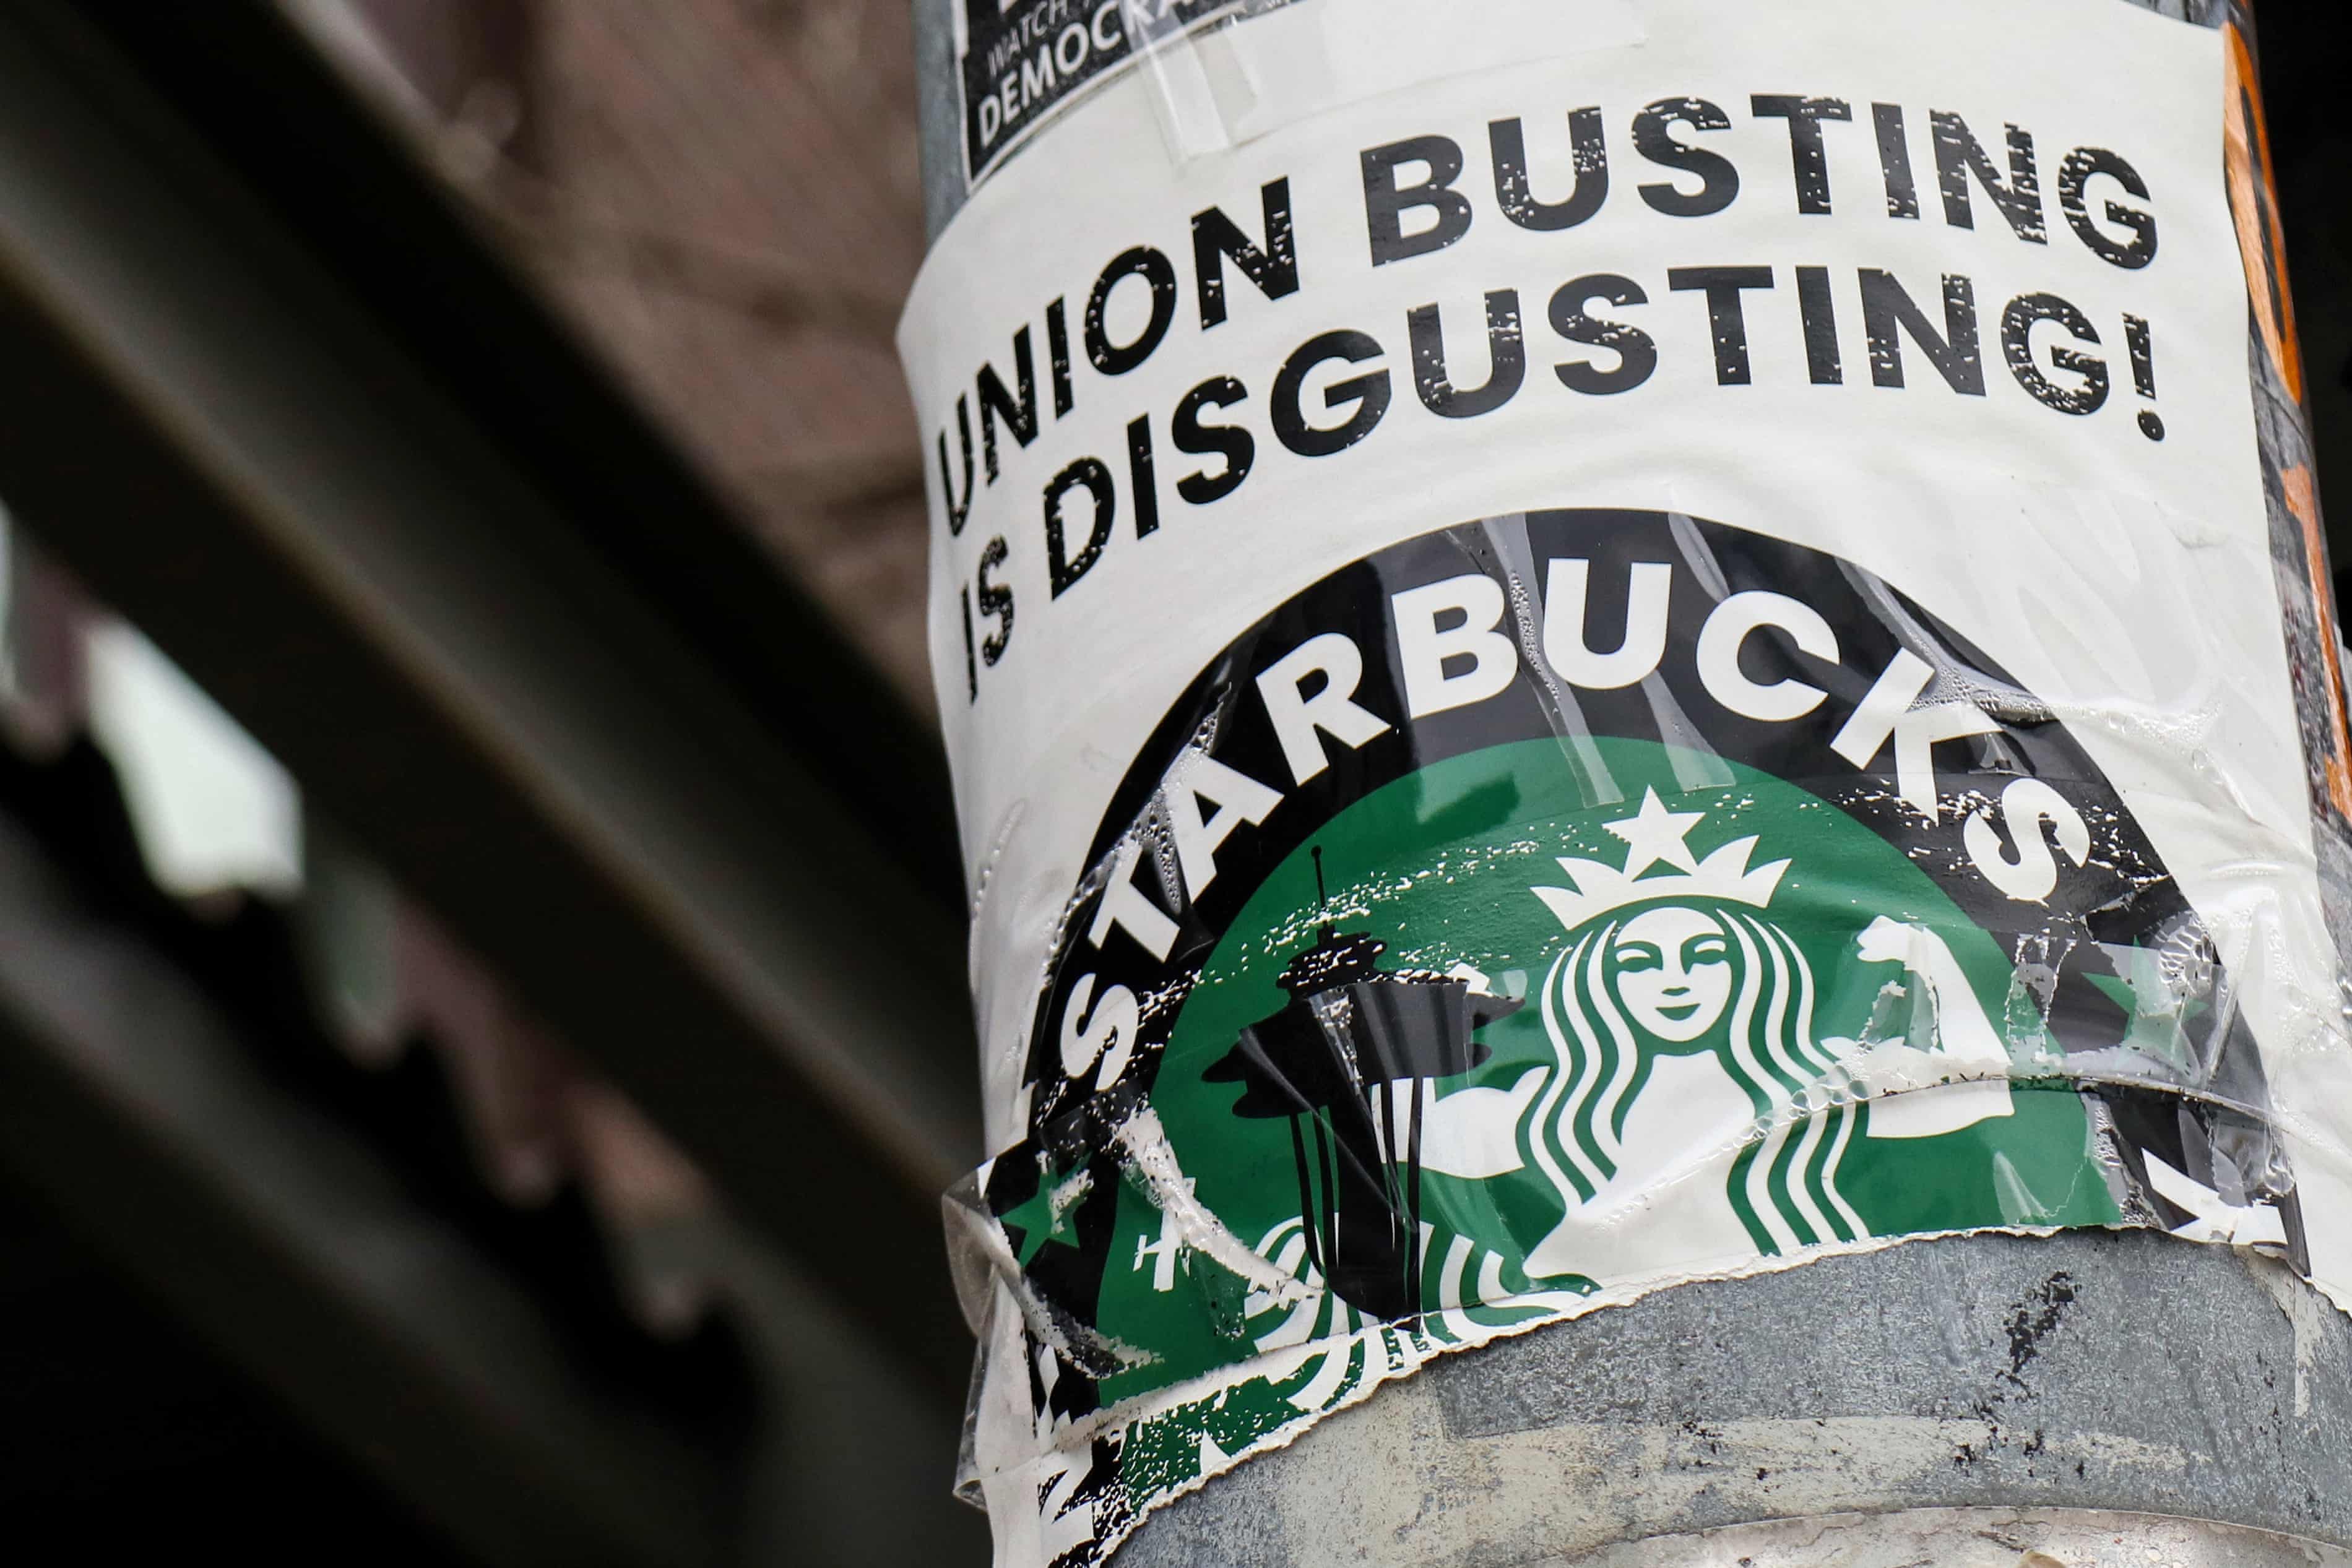 Twenty-five US universities face calls to cancel Starbucks contracts (theguardian.com)